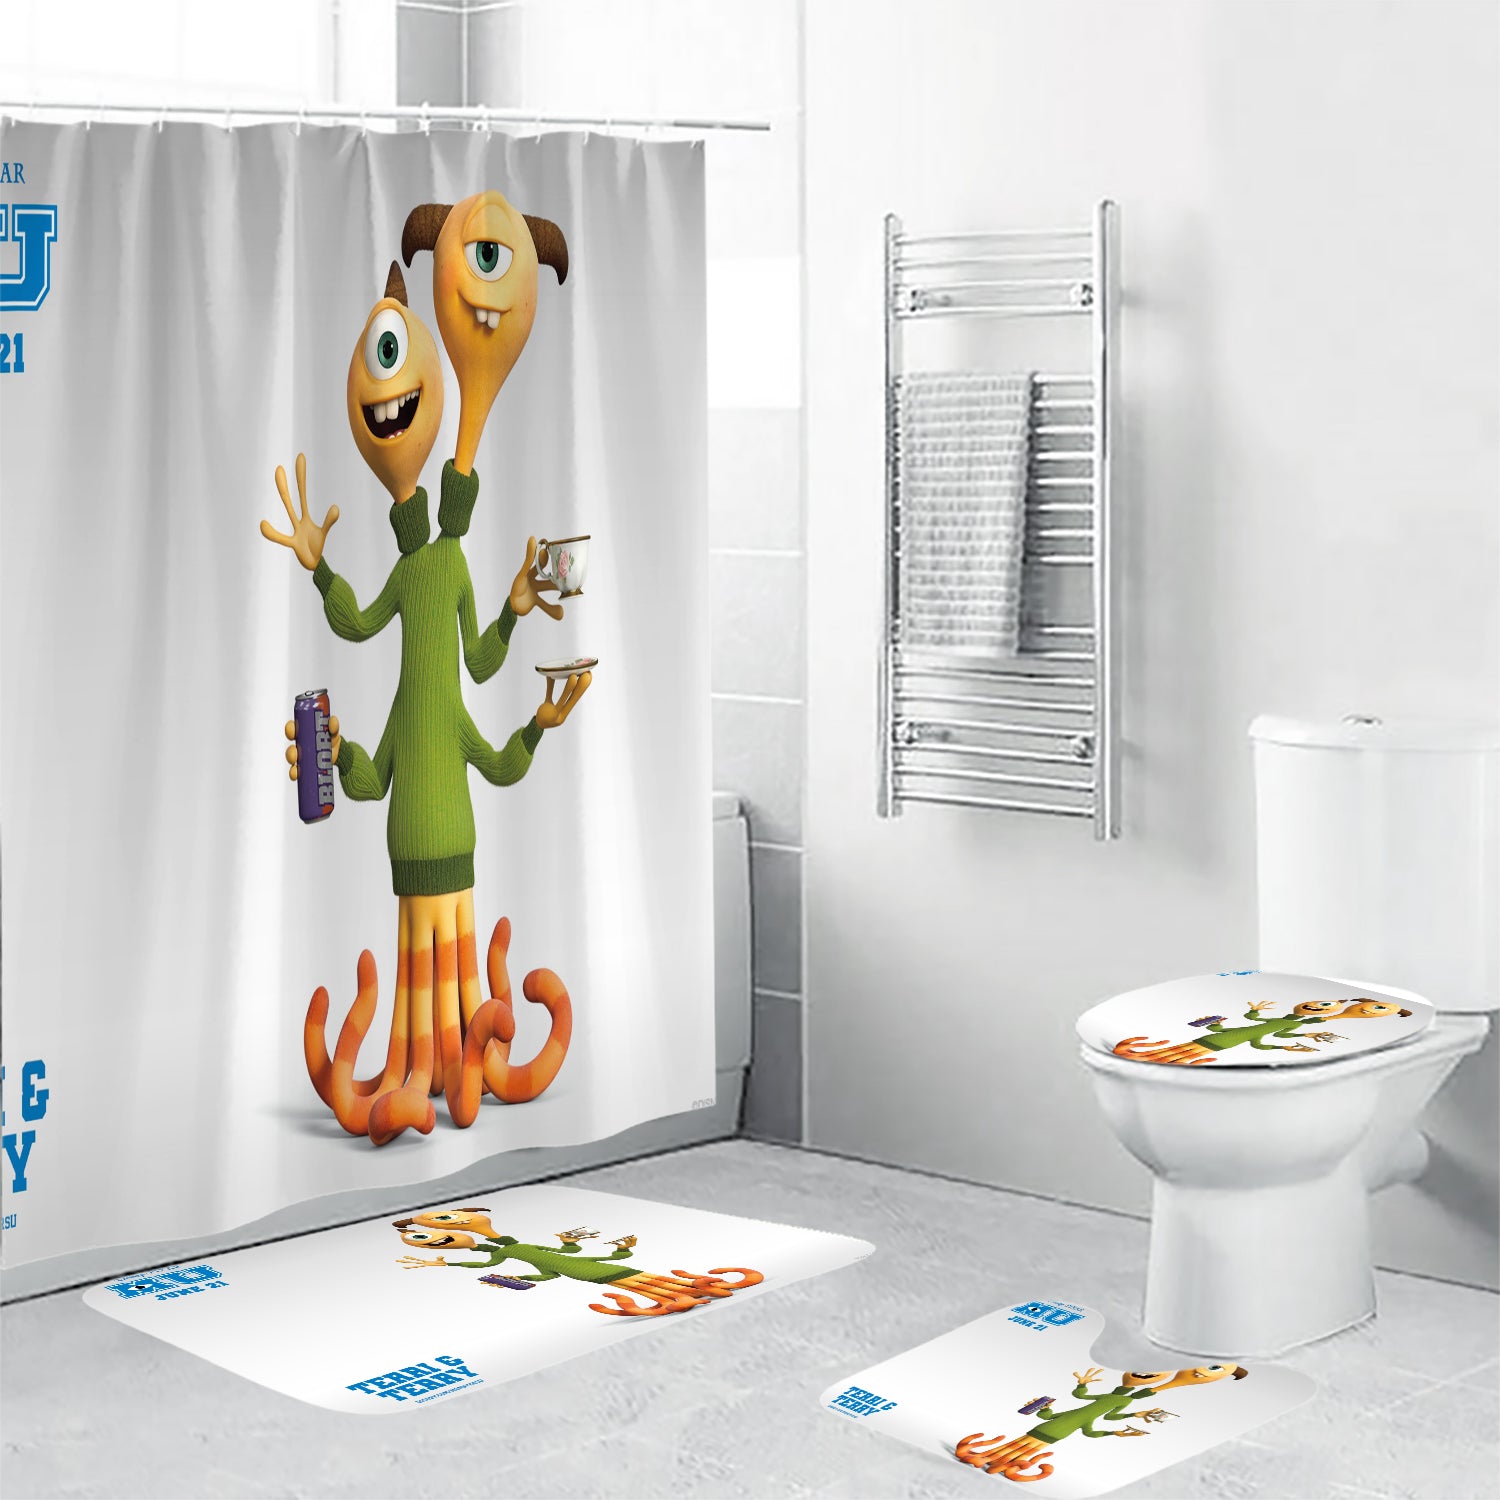 Characters Terri and Terry Monsters Inc Monsters University Movie Disney Pixar Waterproof Shower Curtain Non-Slip Toilet Lid Cover Bath Mat - Bathroom Set